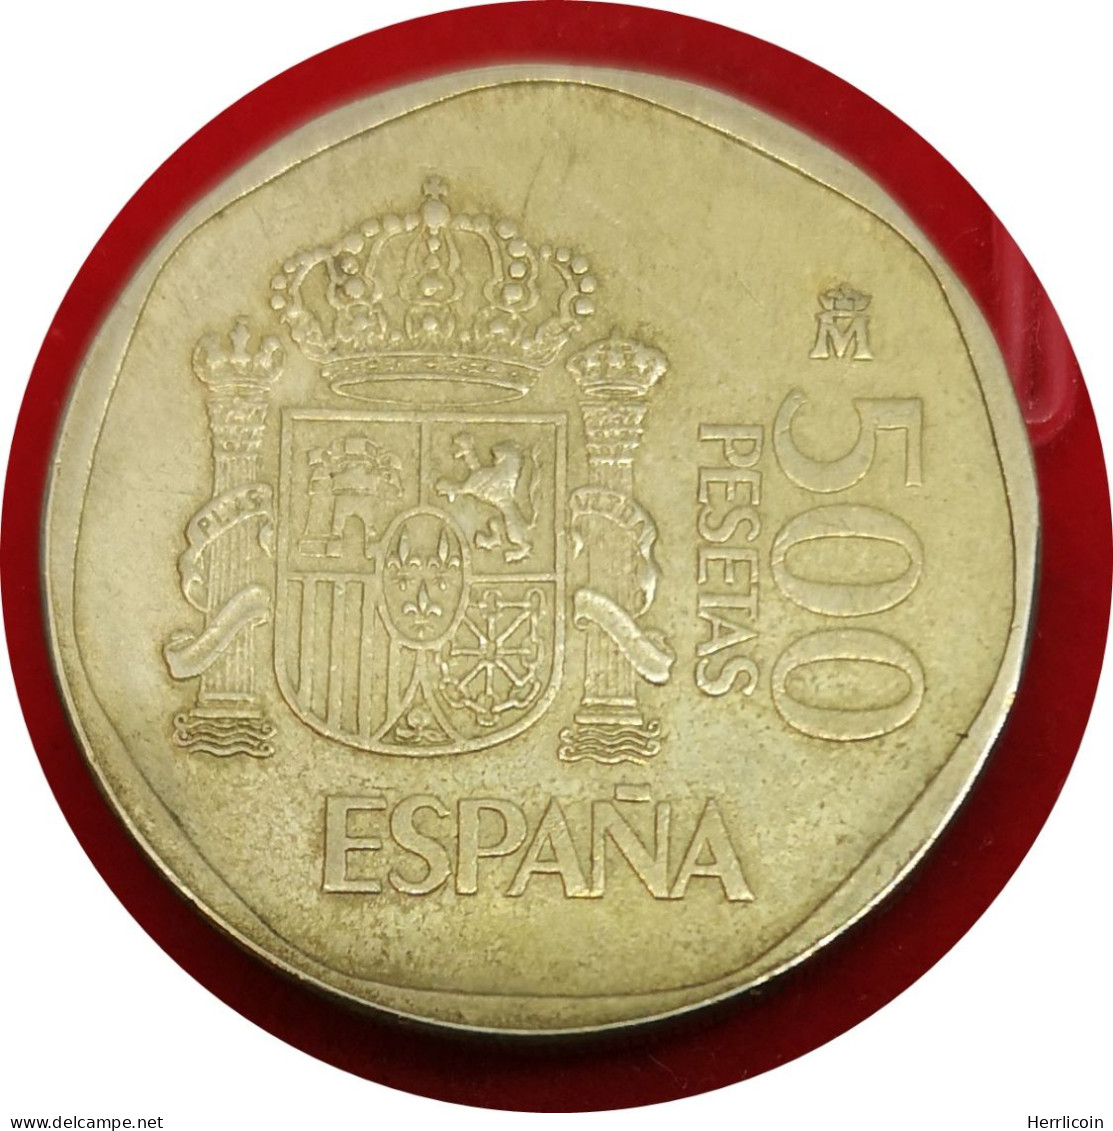 Monnaie Espagne - 1989 - 500 Pesetas Juan Carlos I - 500 Pesetas